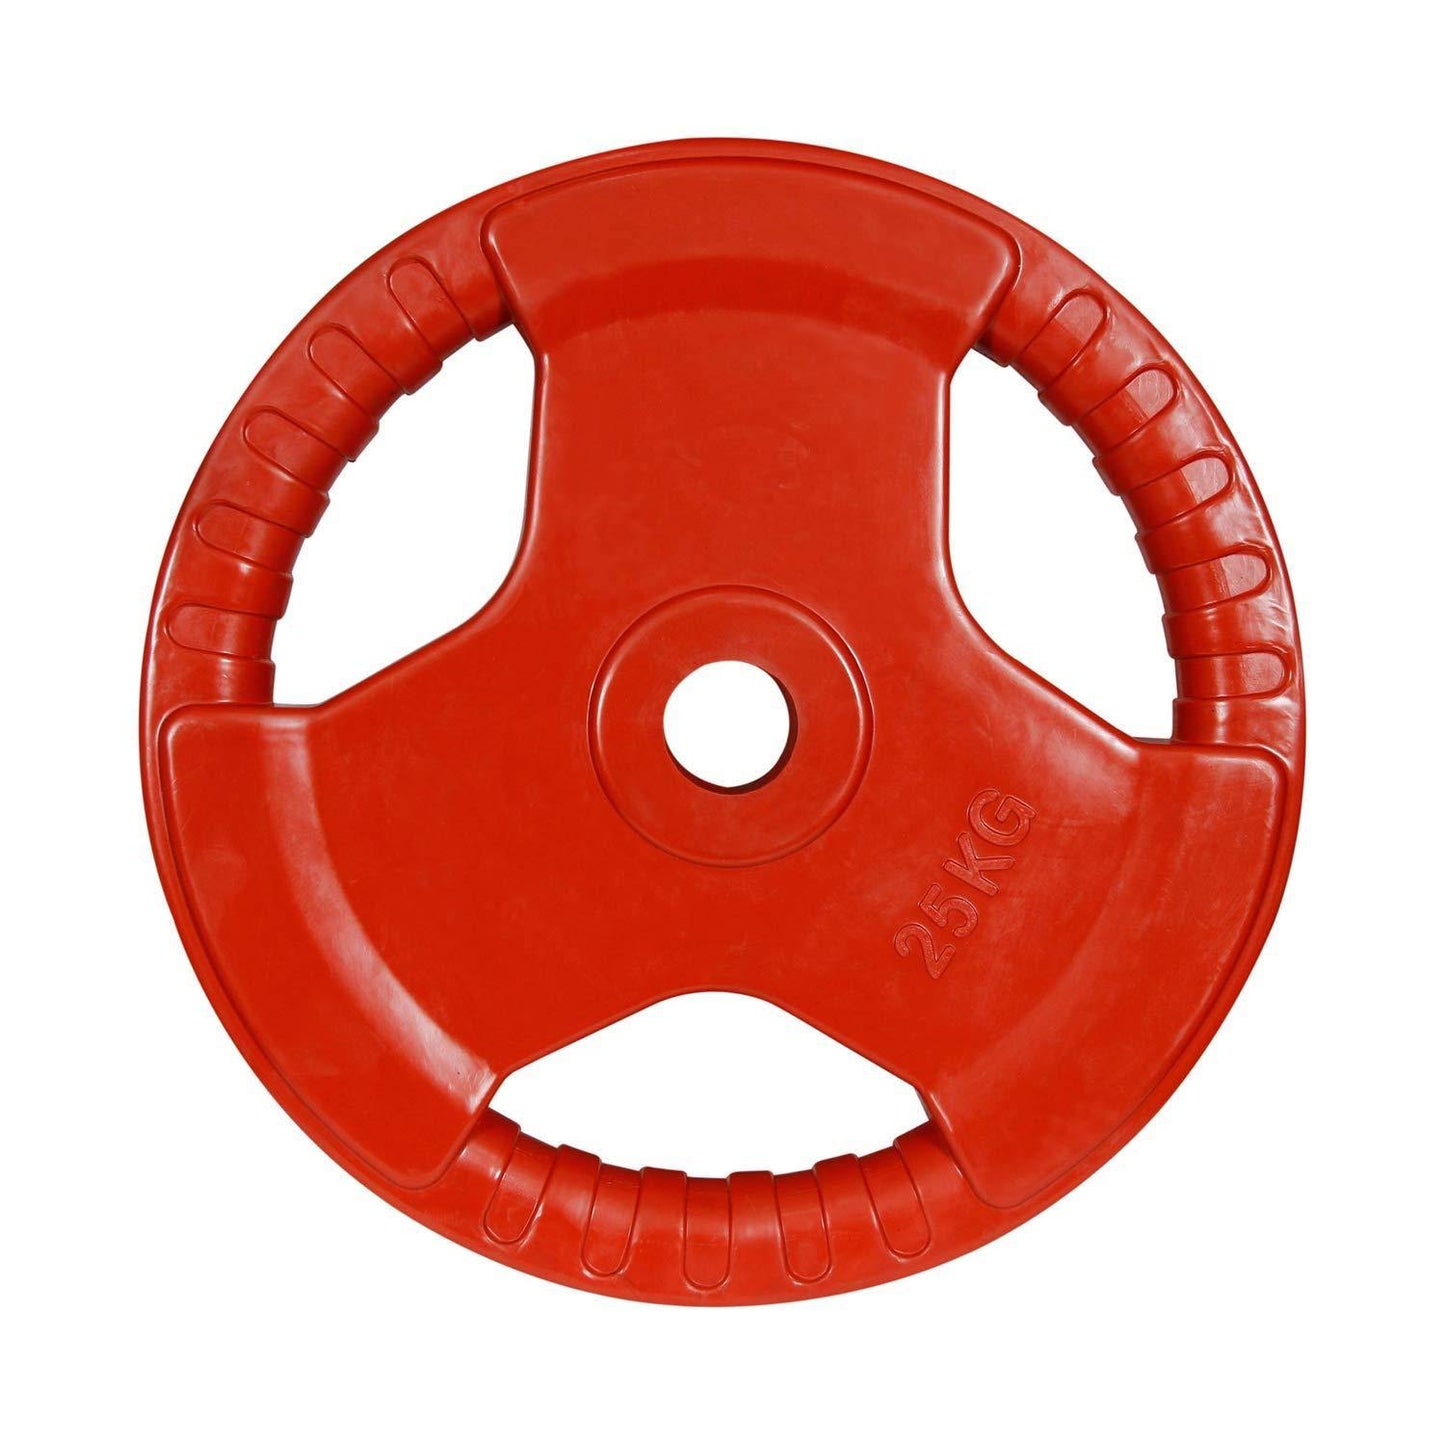 Prokick 3 Cut Finger Grip Color Gym Plate Red - Best Price online Prokicksports.com